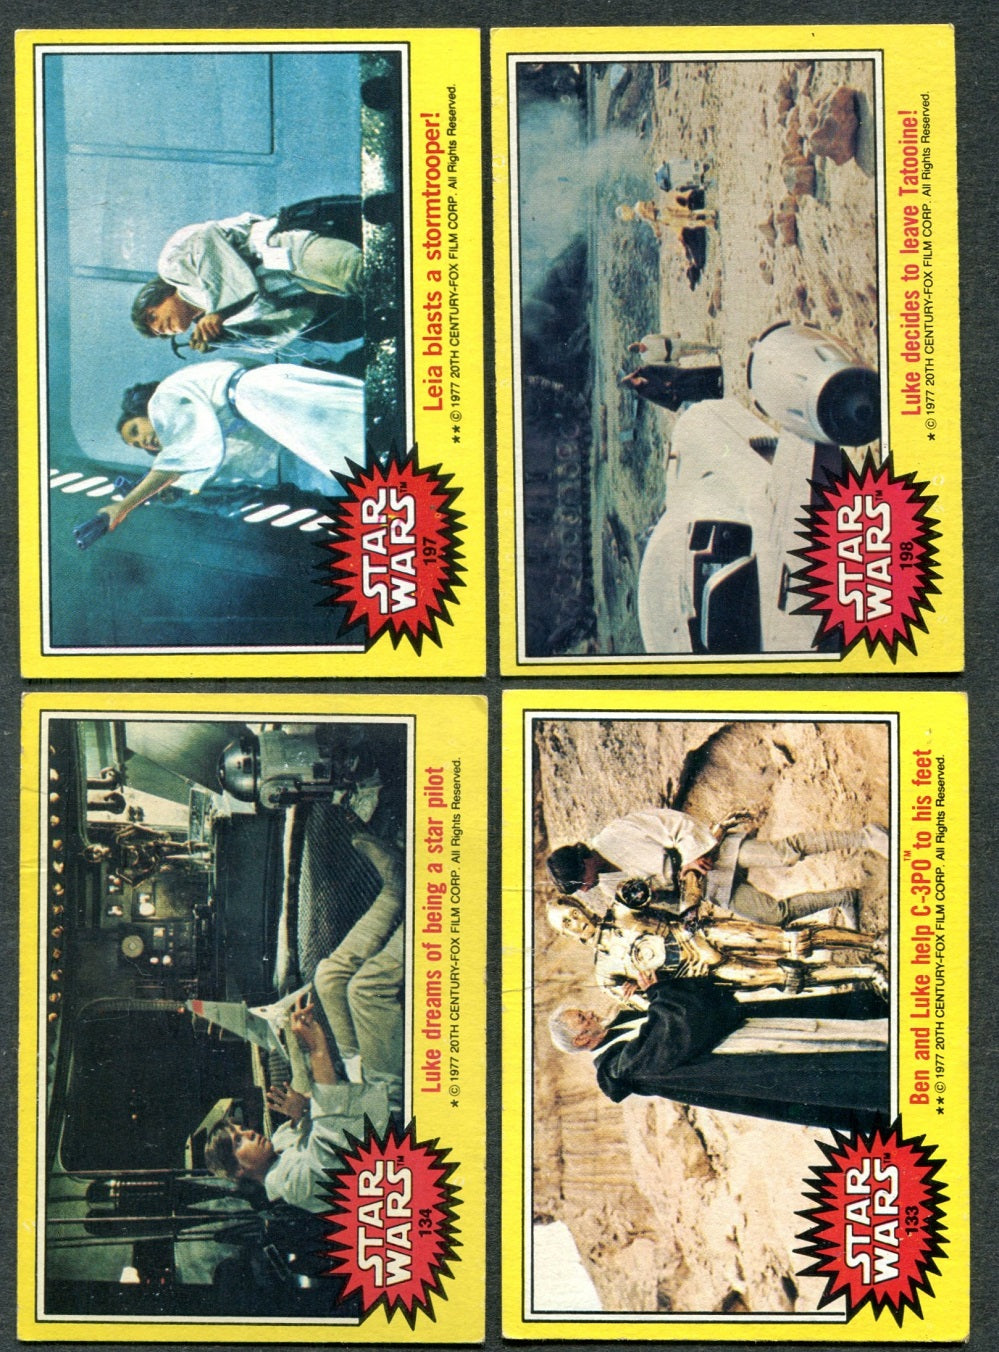 1977 Topps Star Wars Complete Series 3 Set (66) EX/MT NM